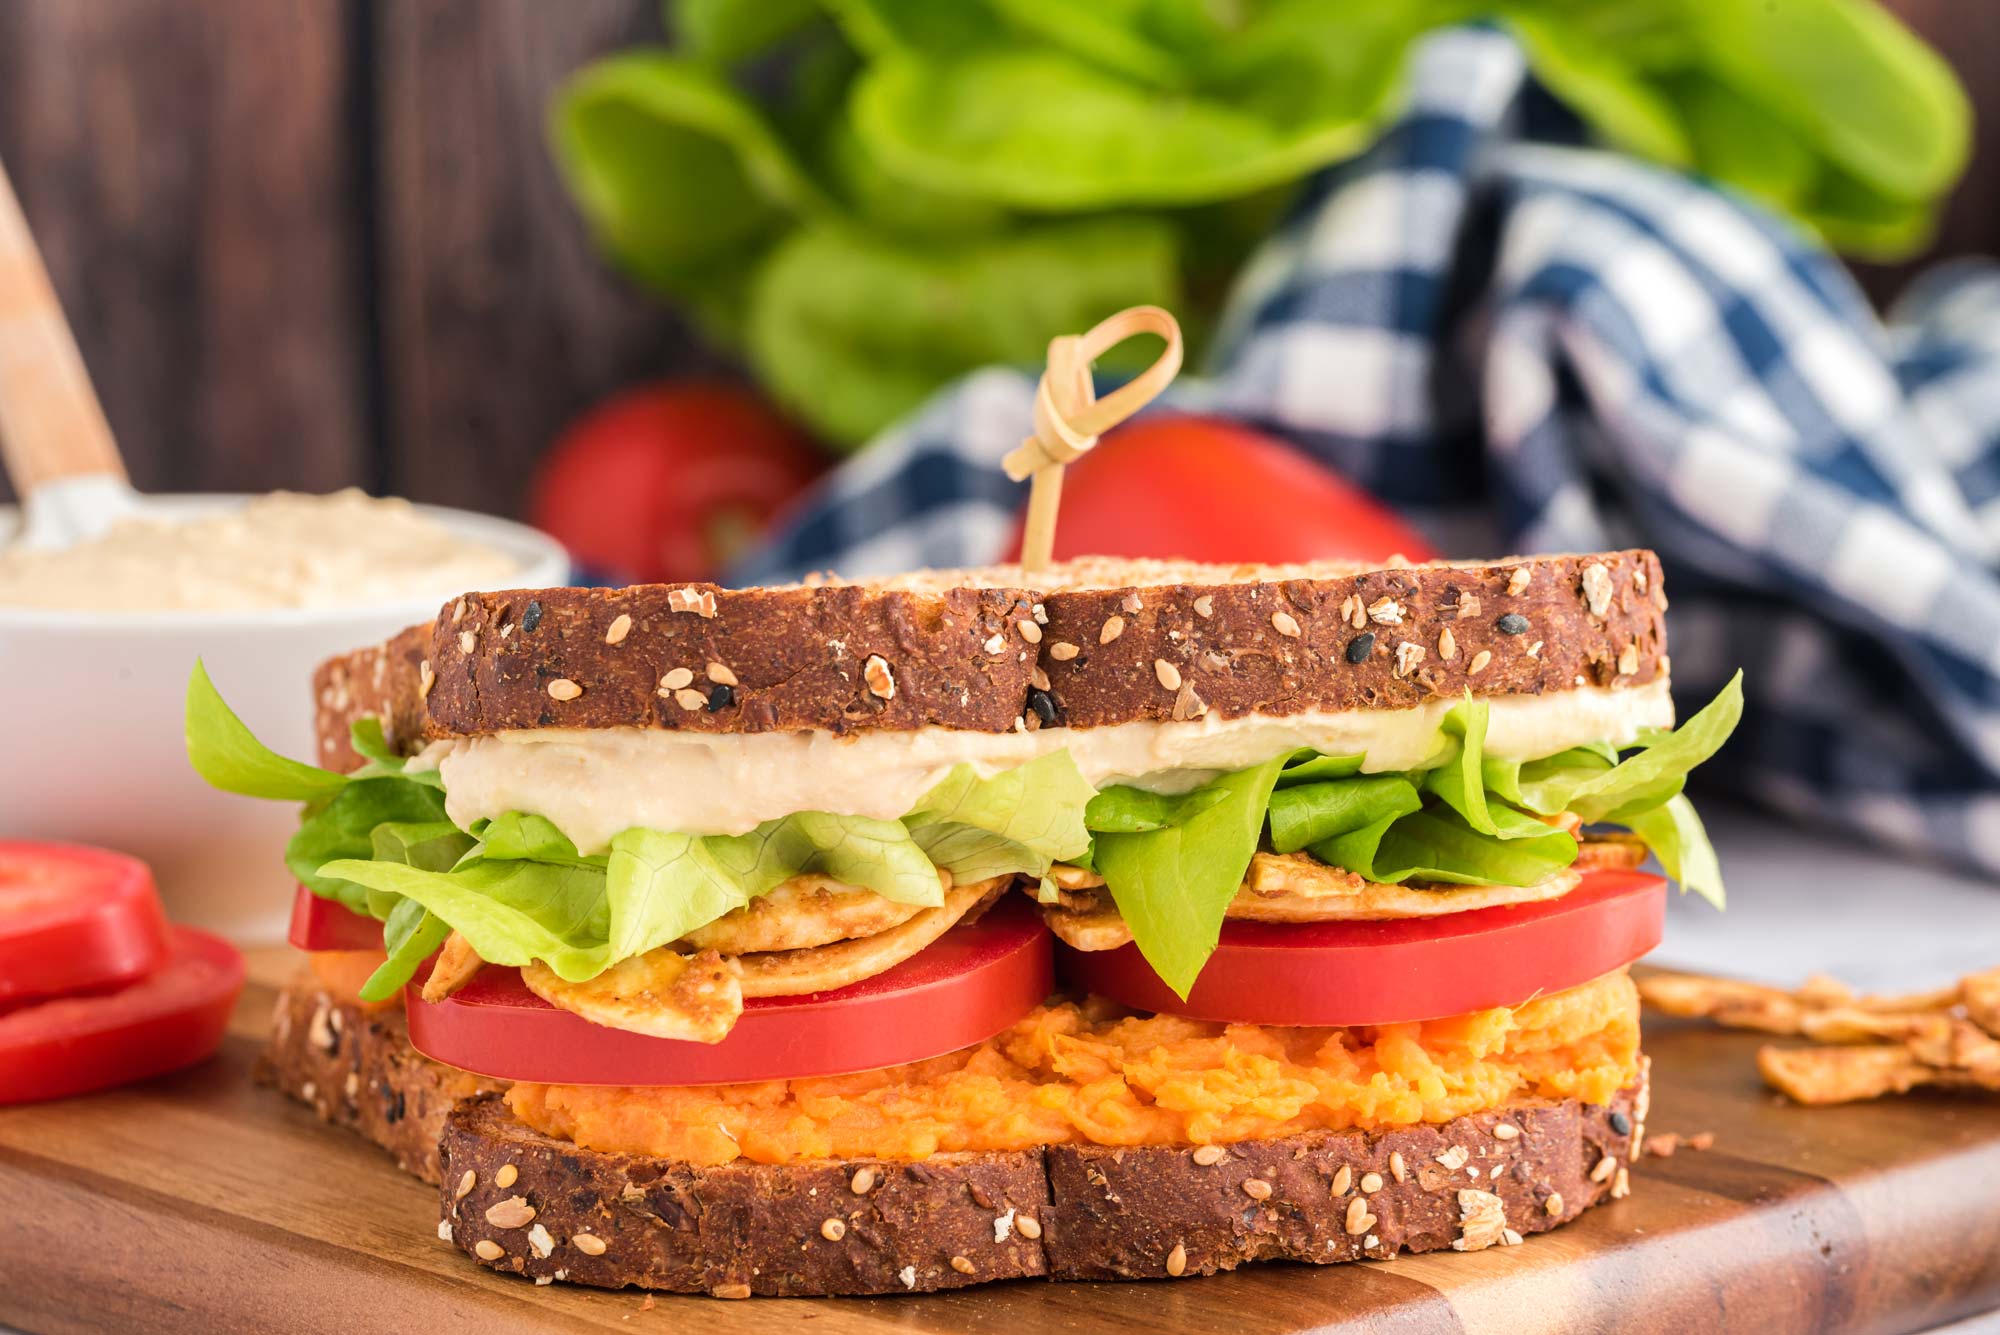 Food combining recipe - Club sandwich on cutting board